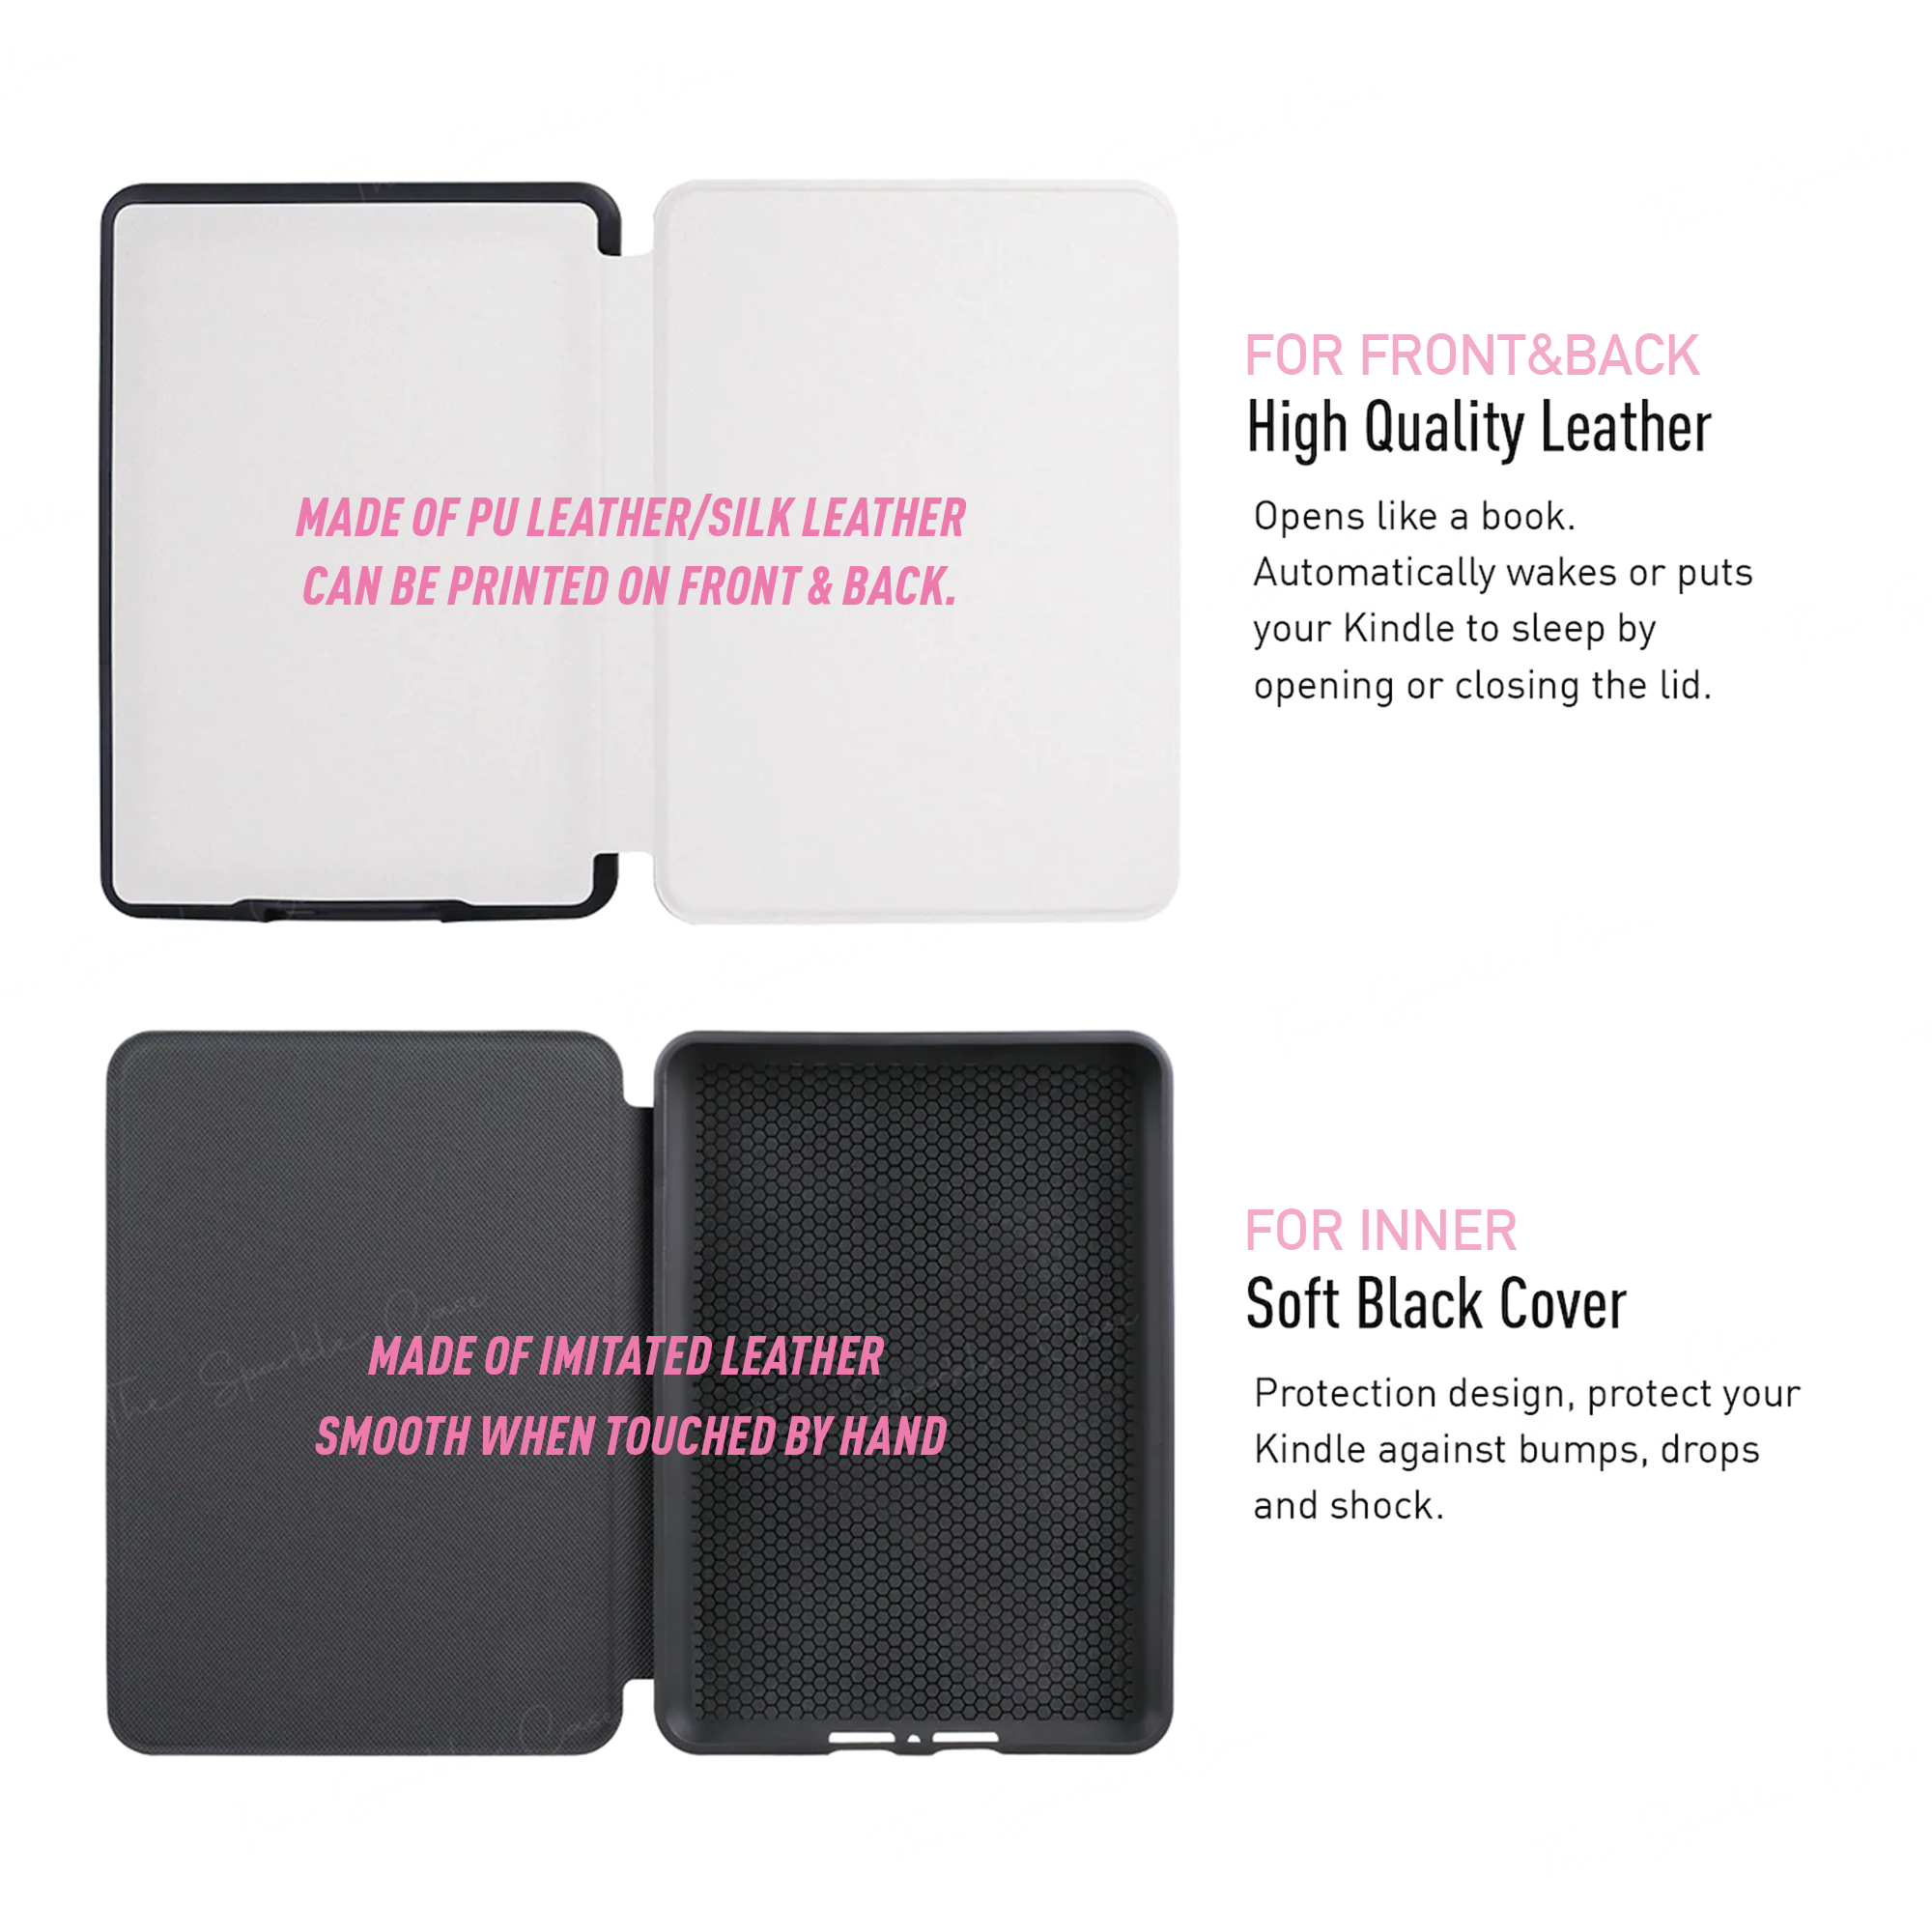 Winter Theme Auto Wake/Sleep Kindle case paperwhite Cover Free Personalization